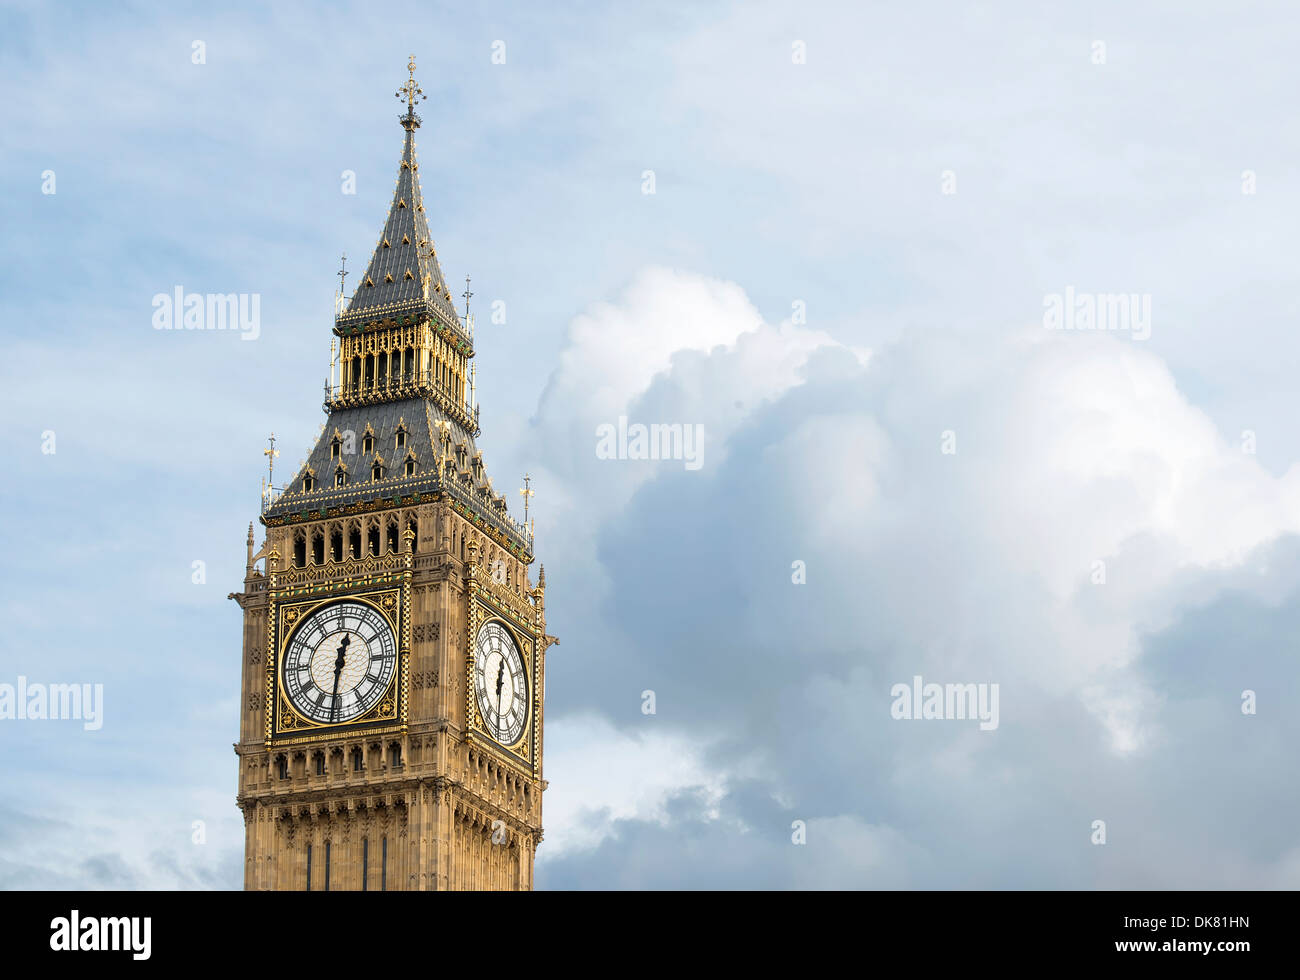 Big Ben London. Dramatic cloudy sky background Stock Photo